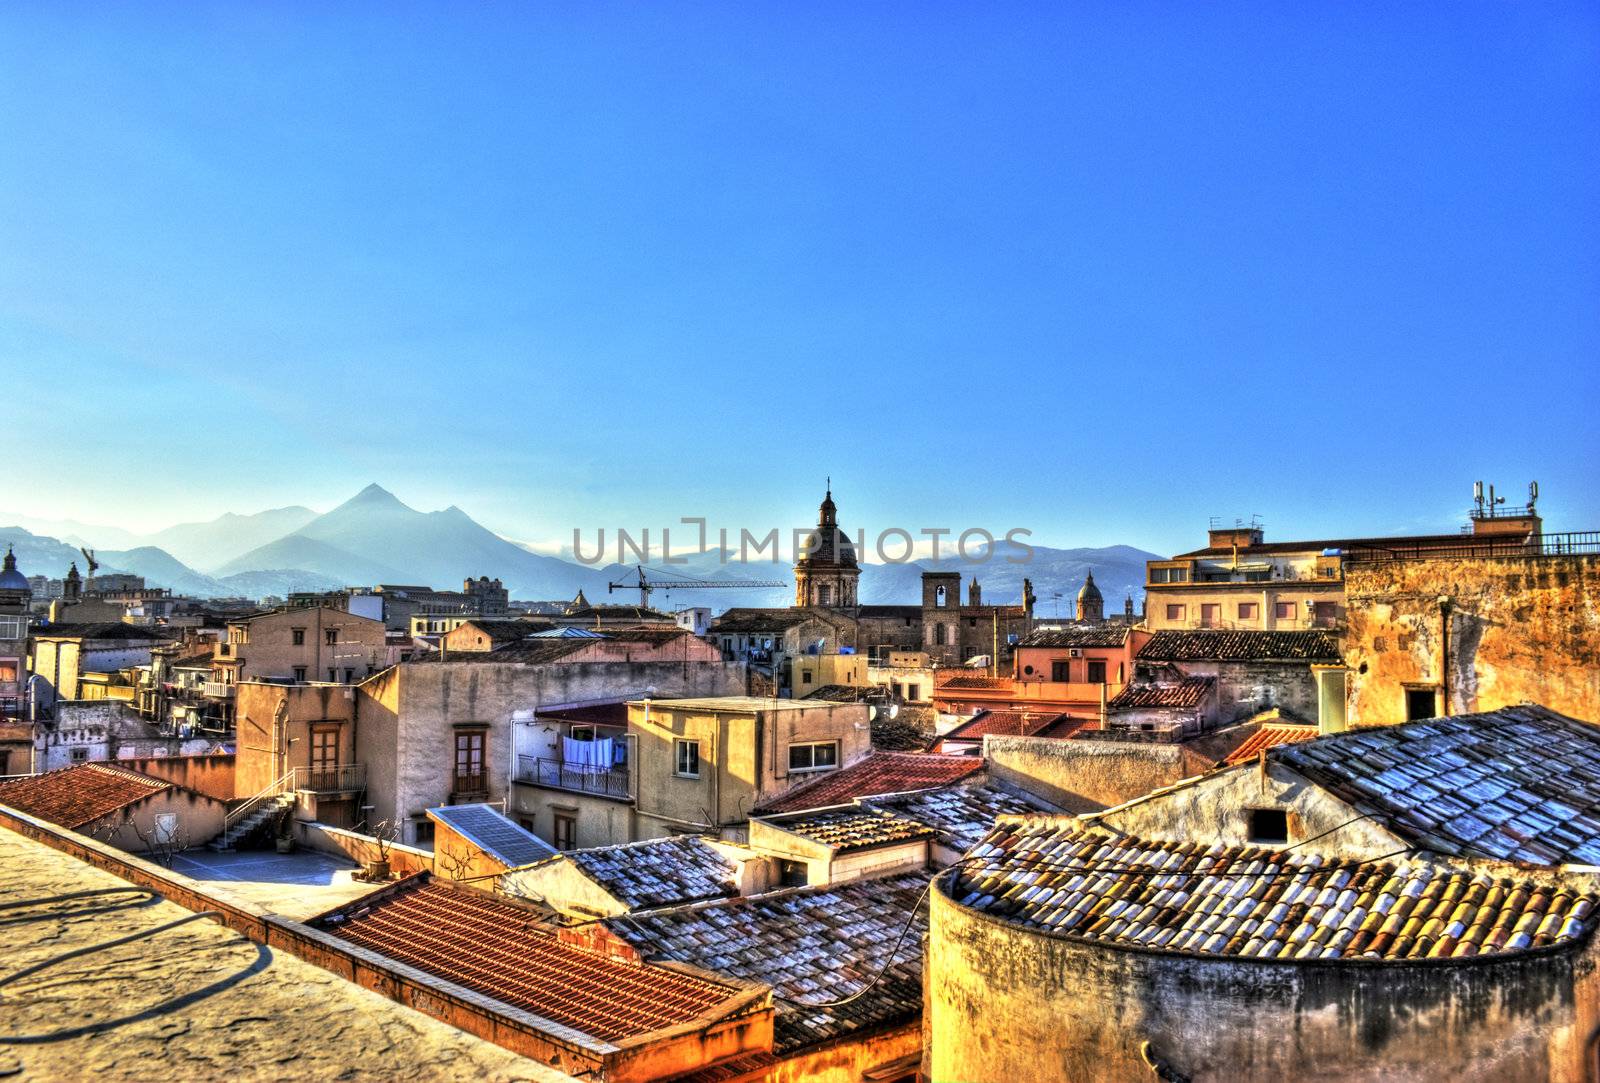 View of Palermo in the HDR by gandolfocannatella